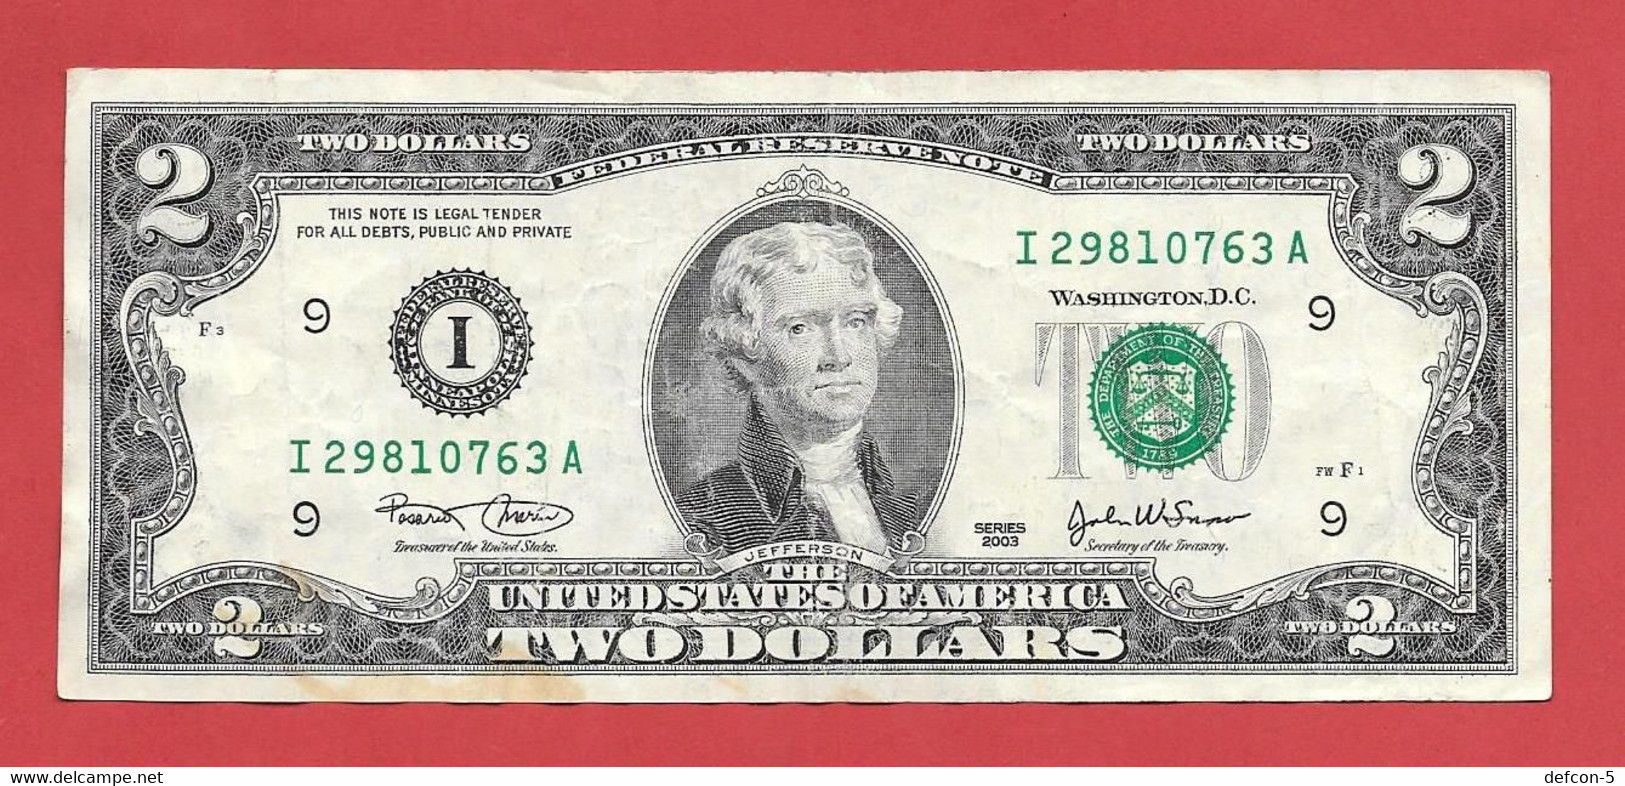 Rarität ! 1X 2 US-Dollar Auf Informations-Blatt [2003] > I 29810763 A < {$002-002BL} - National Currency